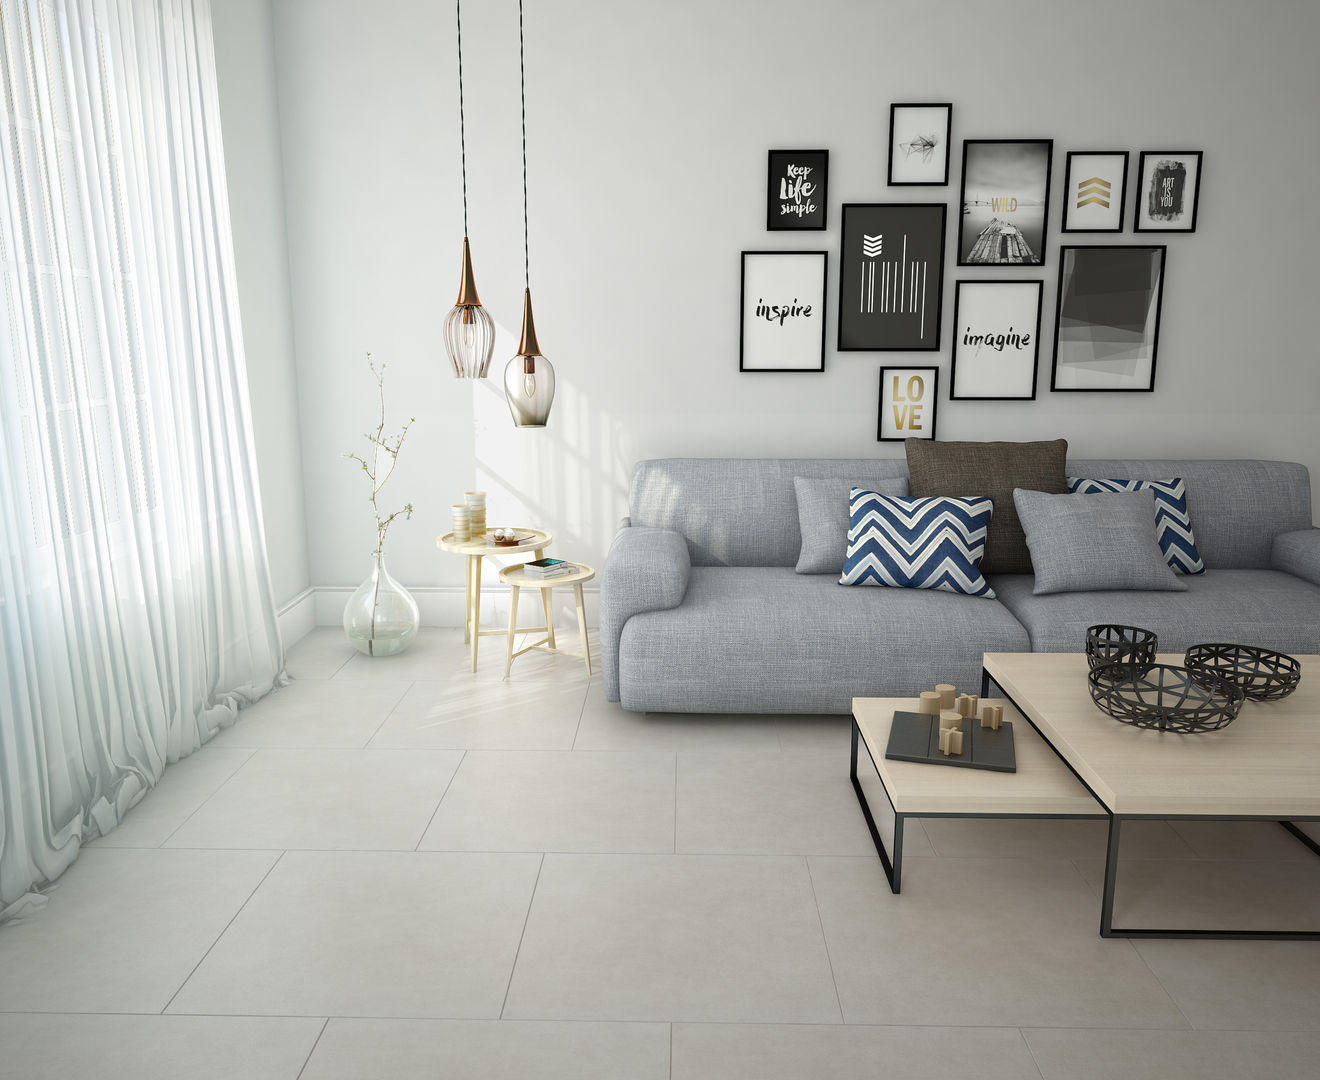 Catalogo Pirrera Cement, olivia Sciuto olivia Sciuto Modern living room